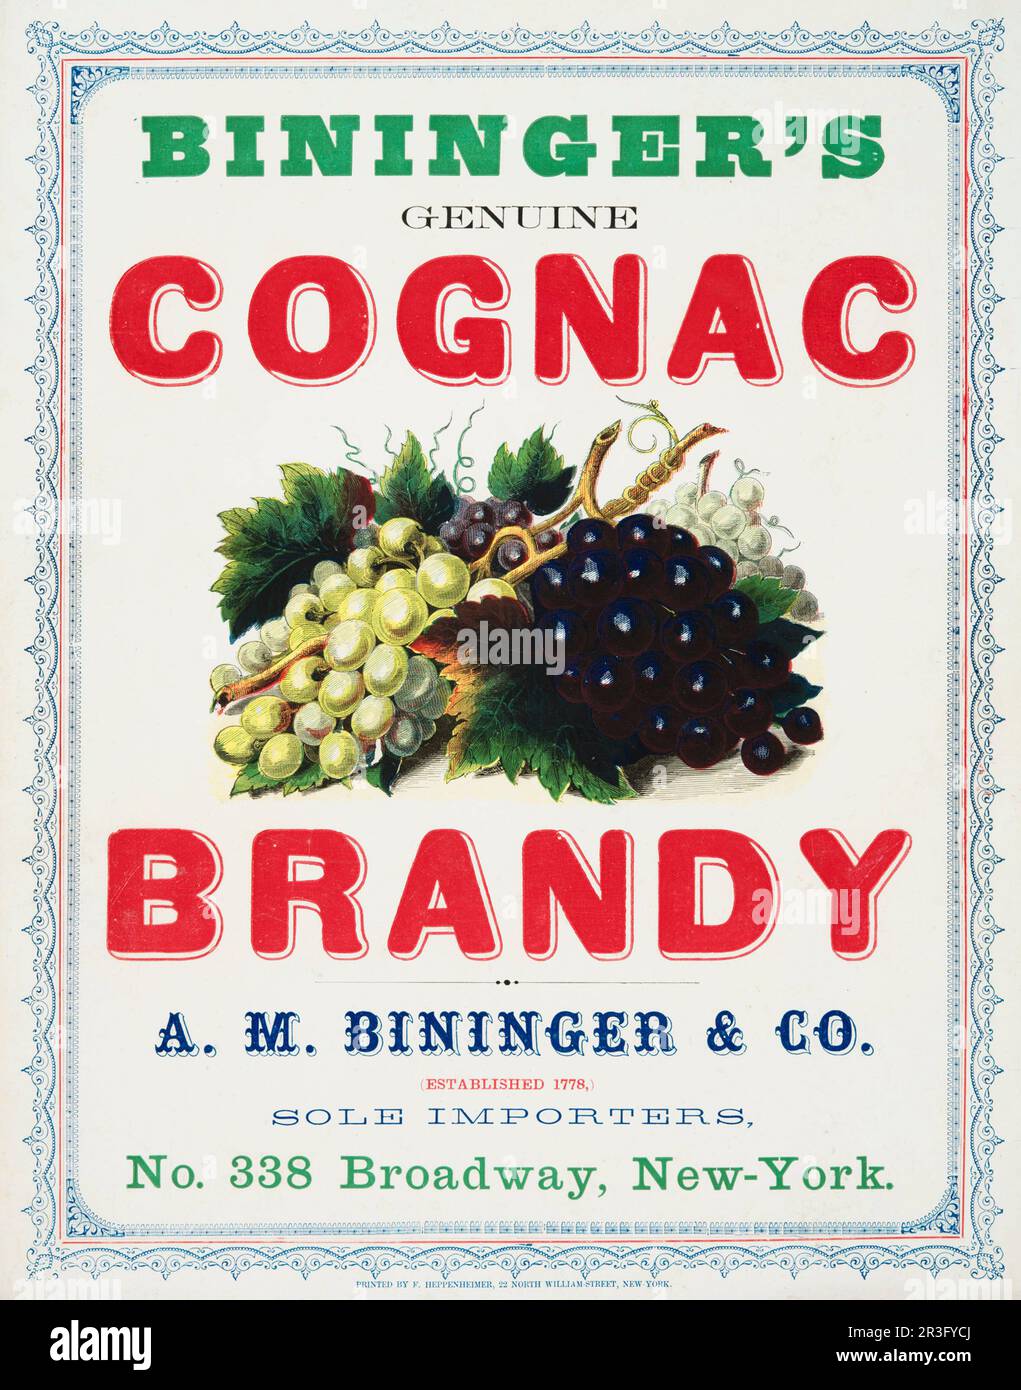 Vintage advertisement for Bininger's cognac brandy. Stock Photo